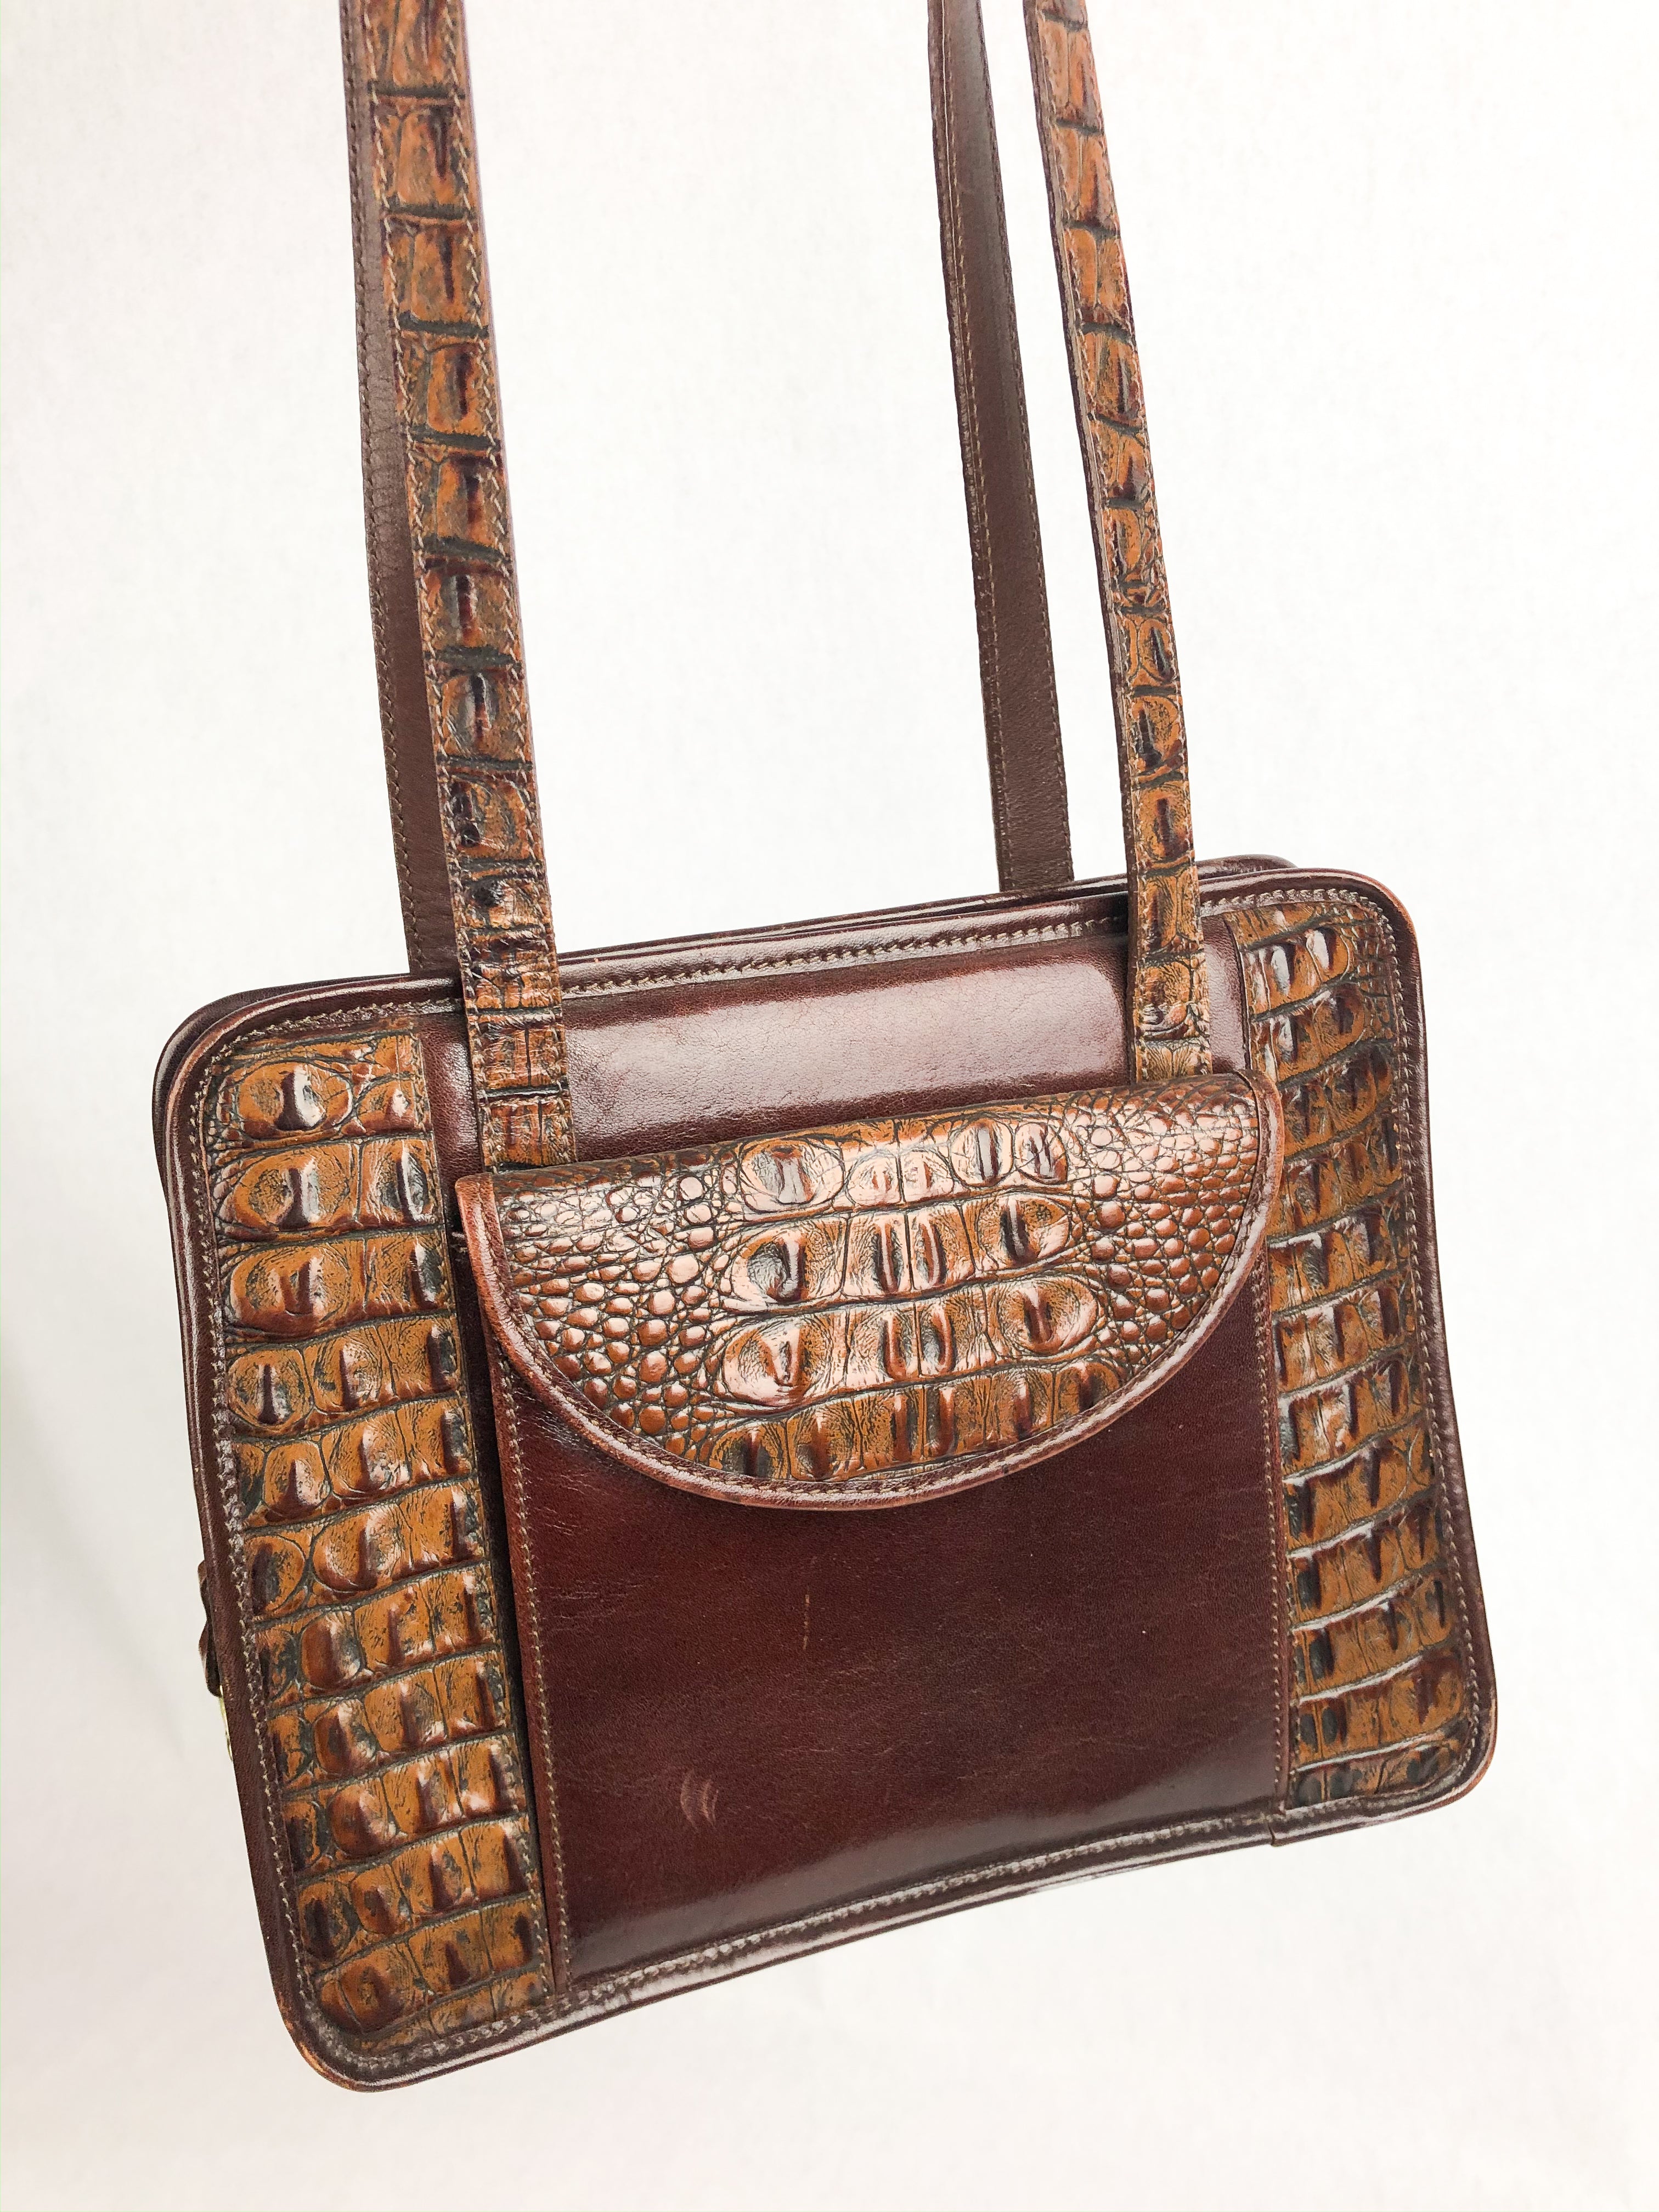 Sold at Auction: Brahmin Womens Leather Brown Alligator Handbag